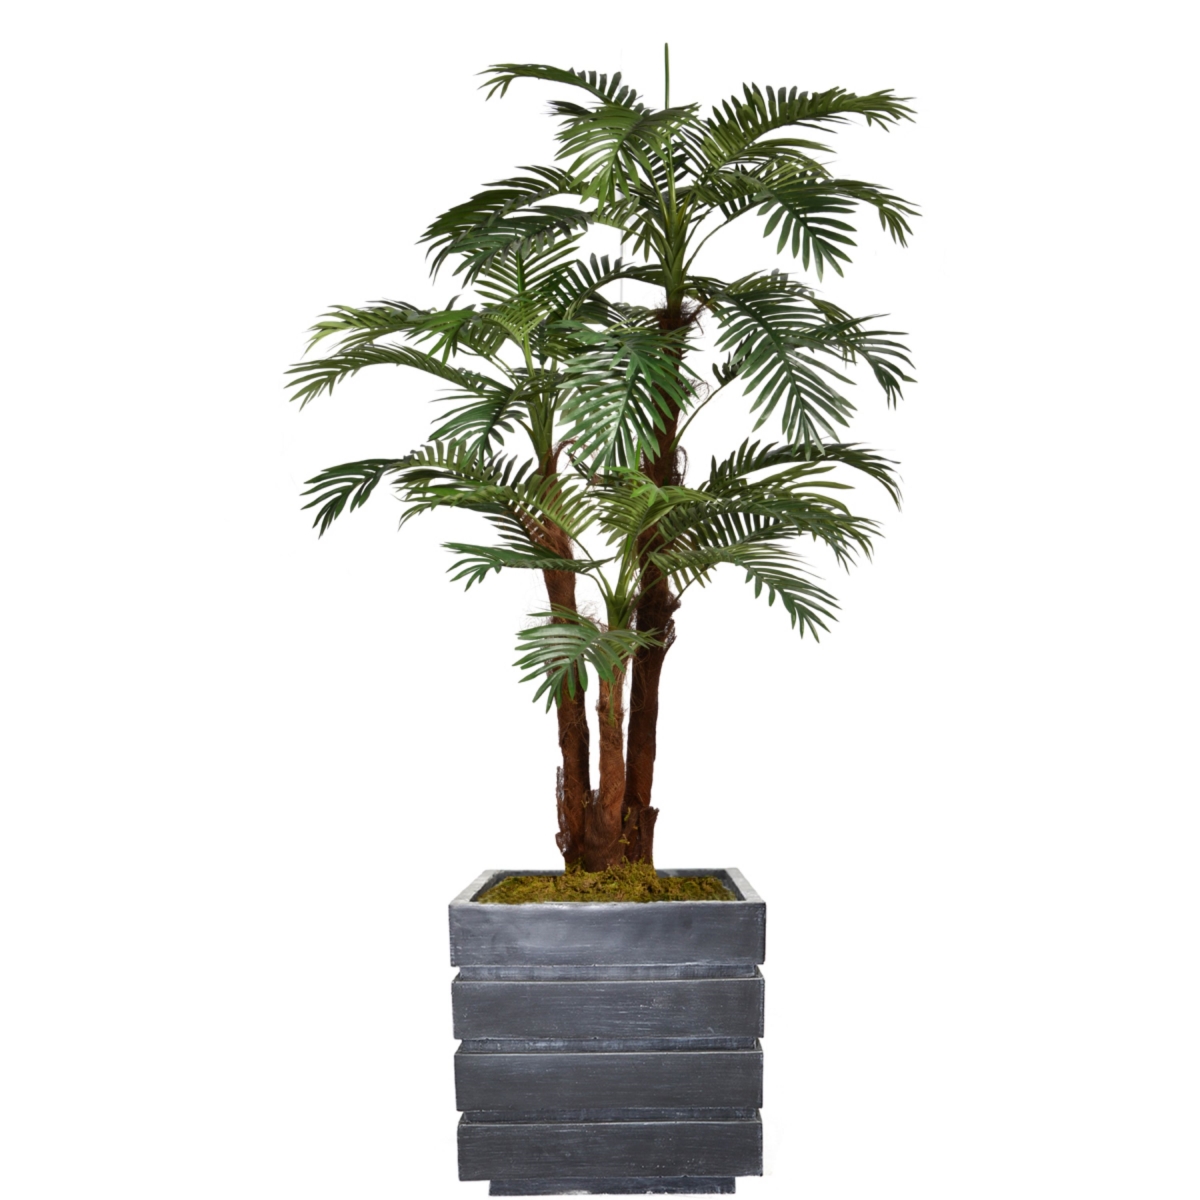 Vhx135204 72 In. Tall Palm Tree With Burlap Kit & Fiberstone Planter